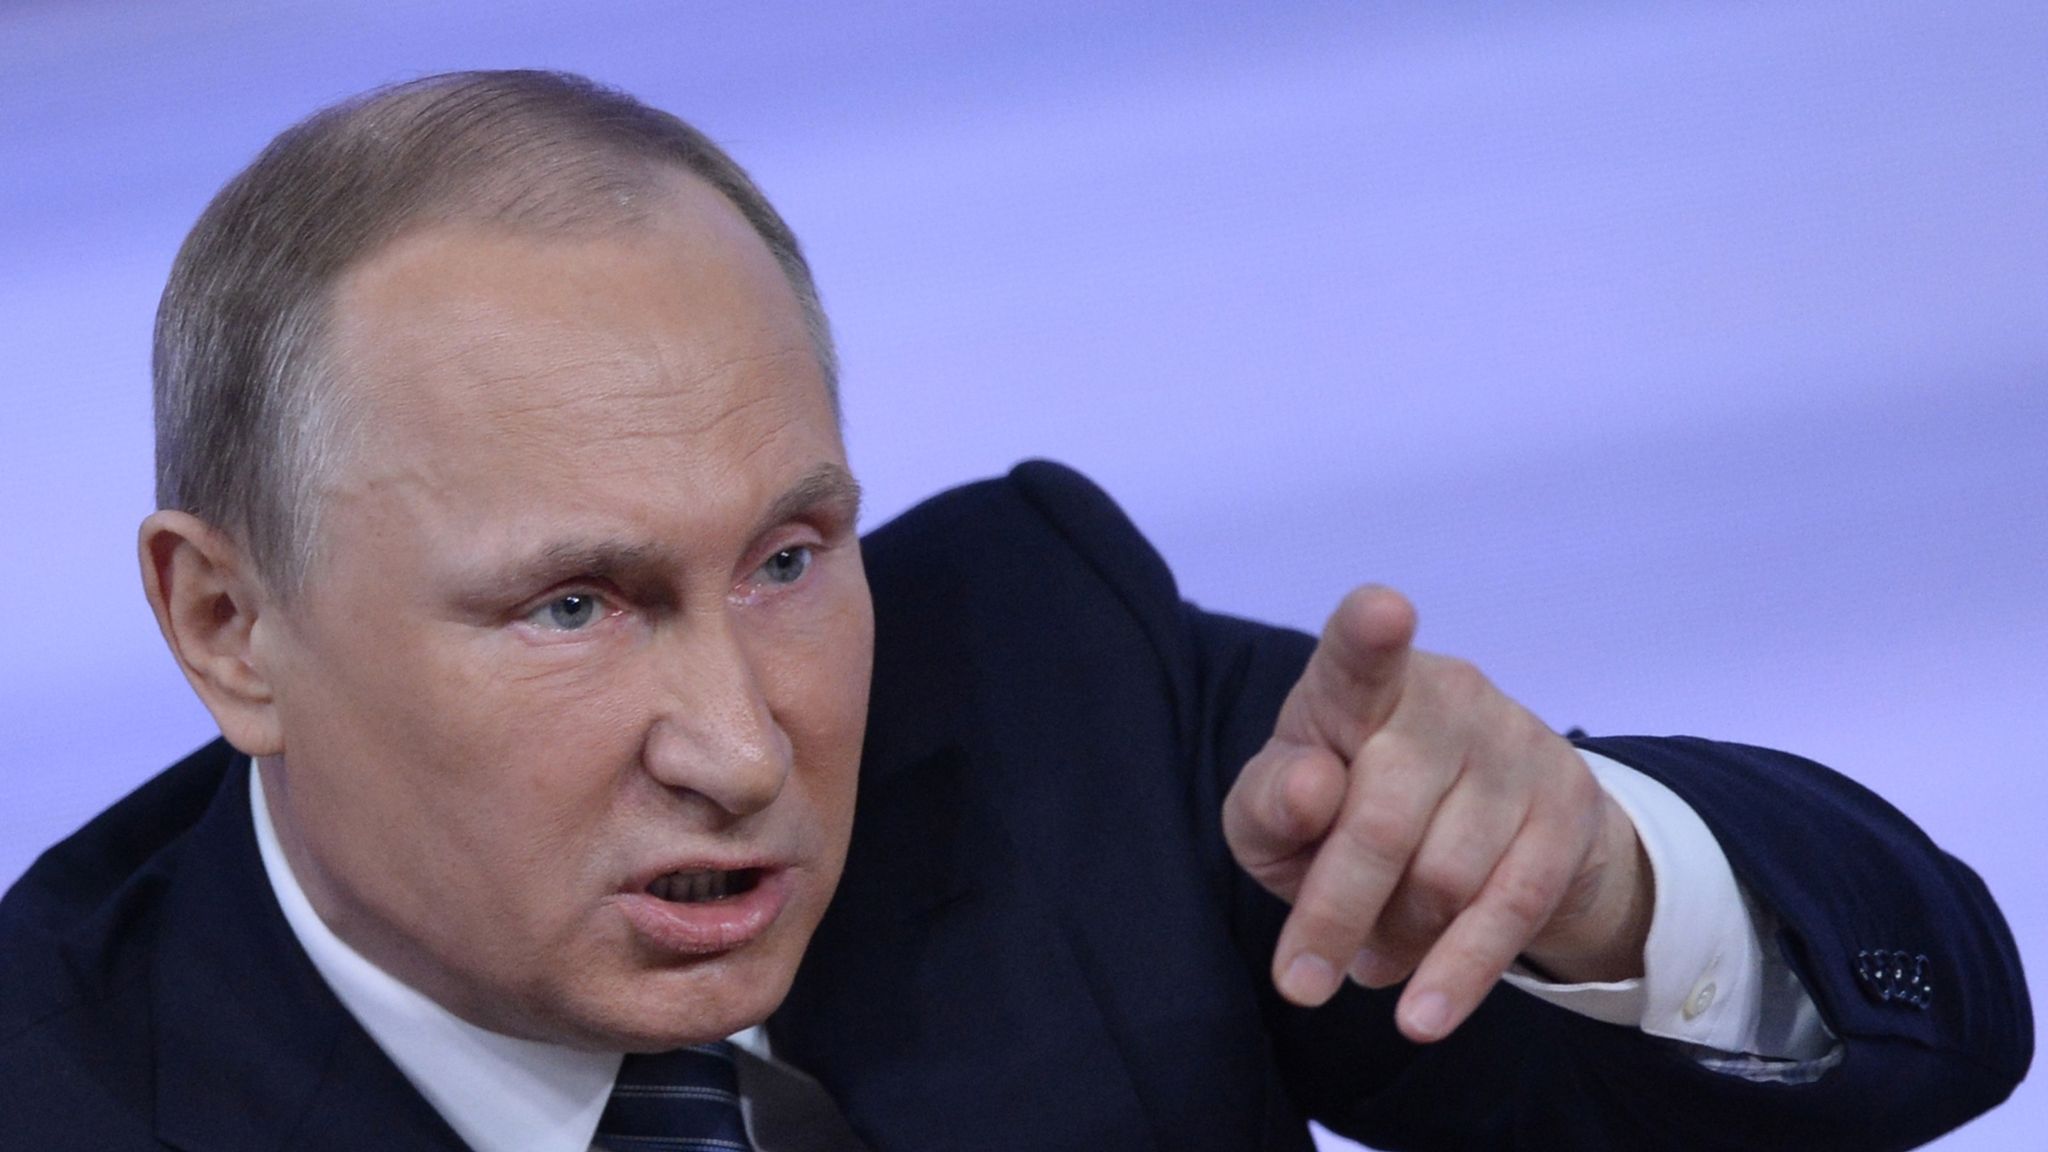 Killer Putin Kremlin Wants Fox News Apology Over Oreilly Remark